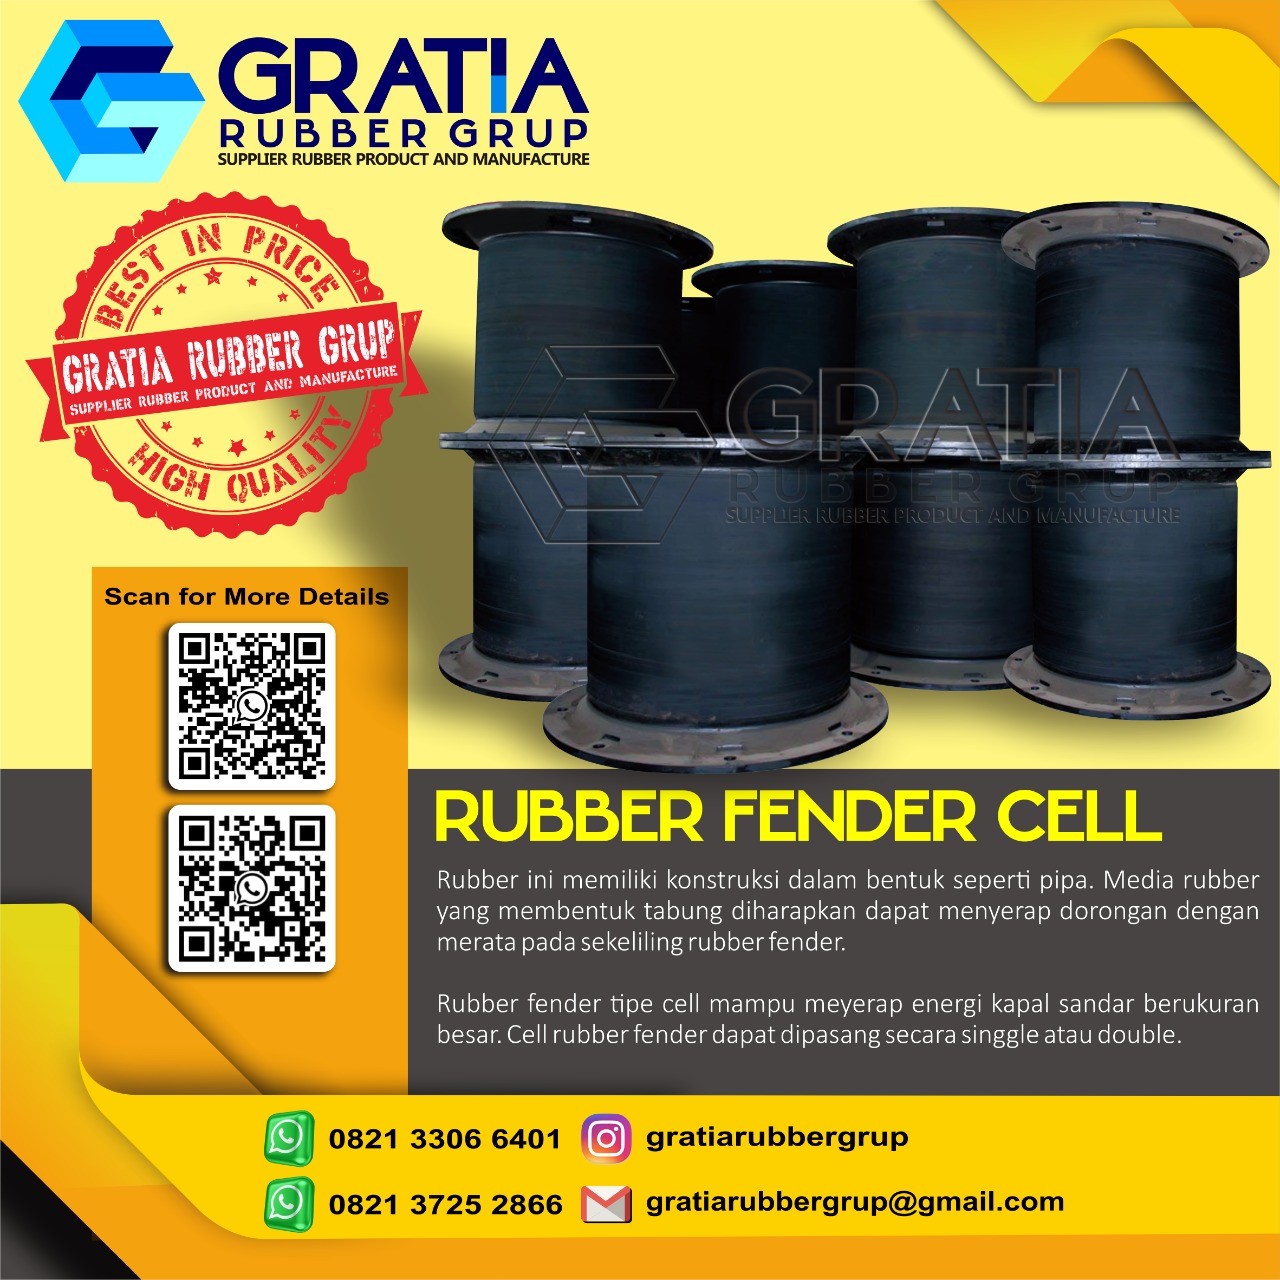 Harga Rubber Fender Berkualitas  Melayani Pengiriman Ke Pariaman Sumatera Barat Hub 0821 3306 0461